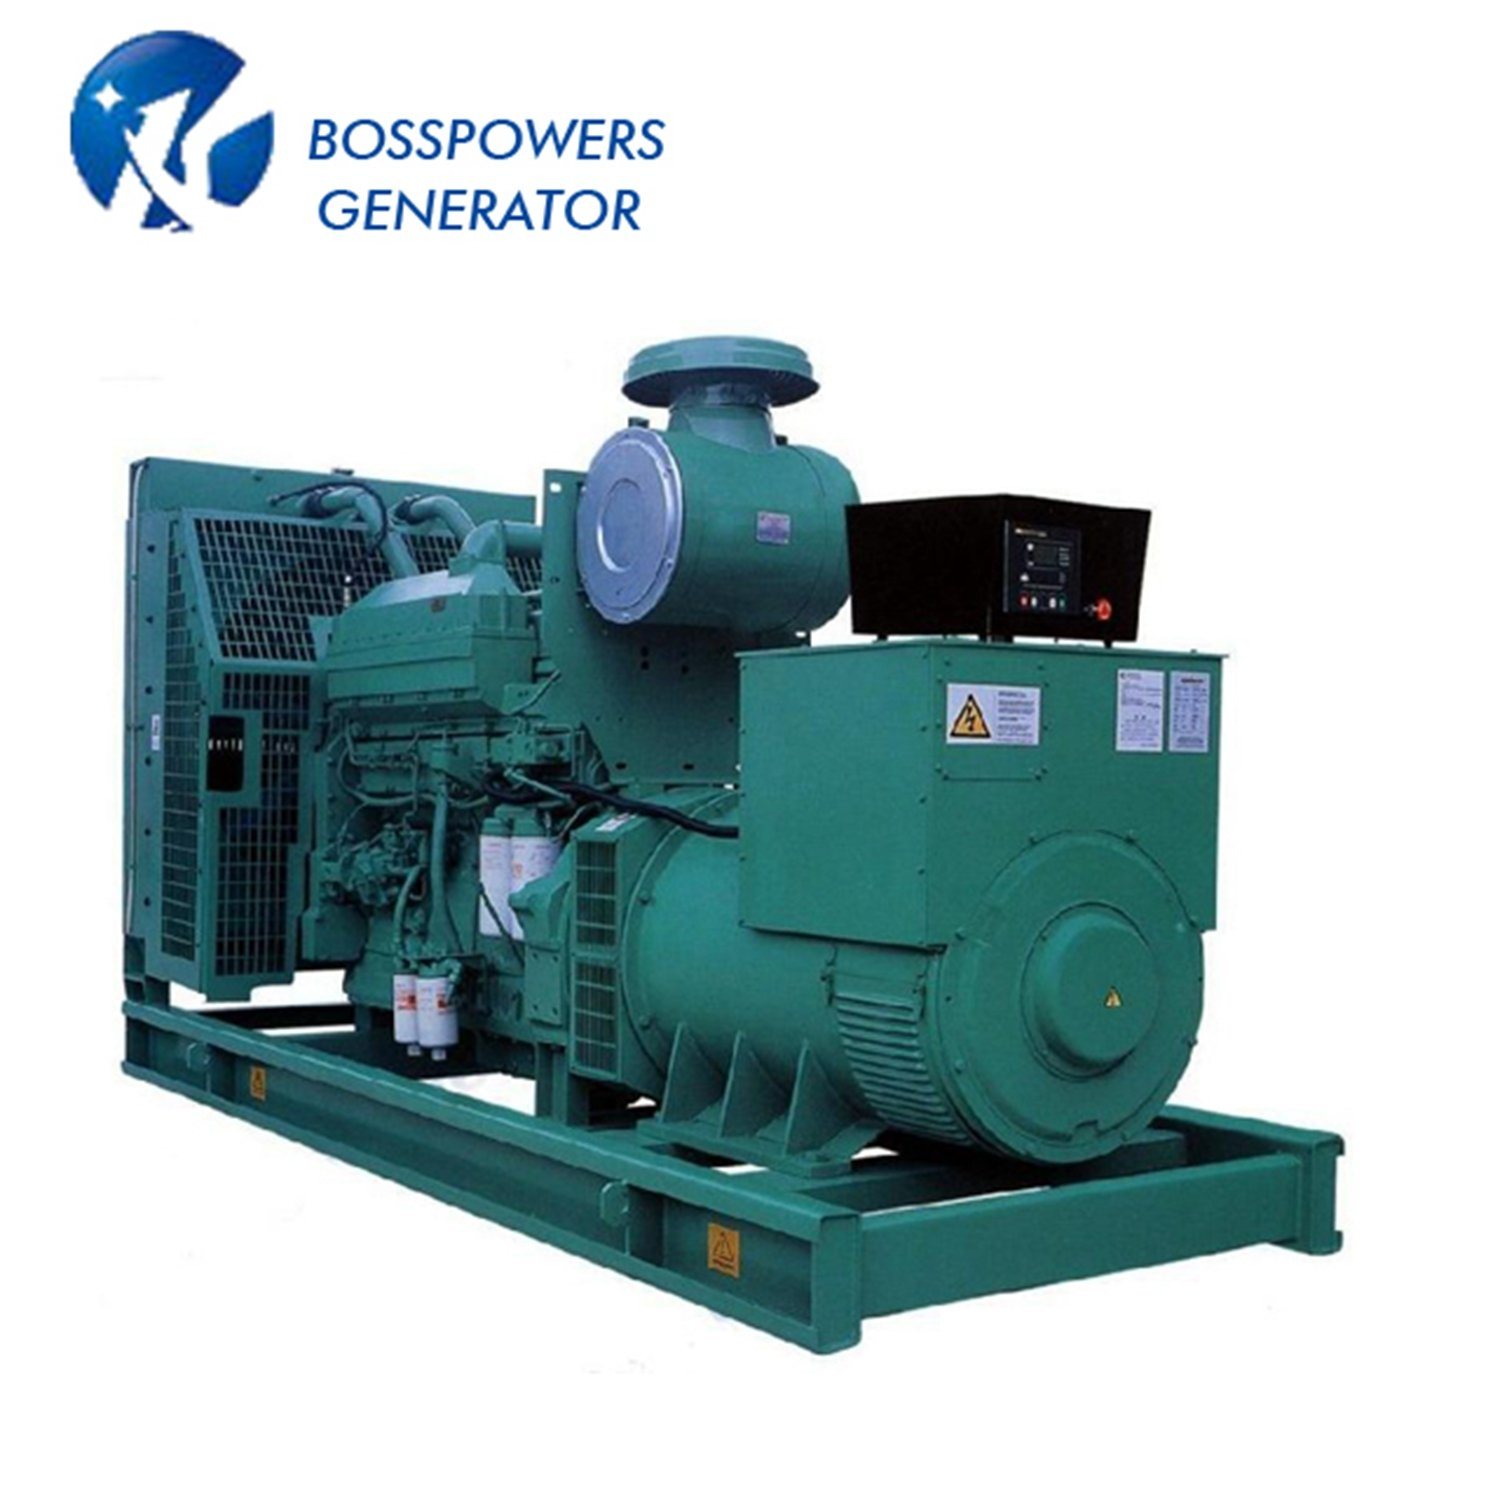 1100kVA Standby Power Cummins Generator Diesel Engine Power System with Synchronized System